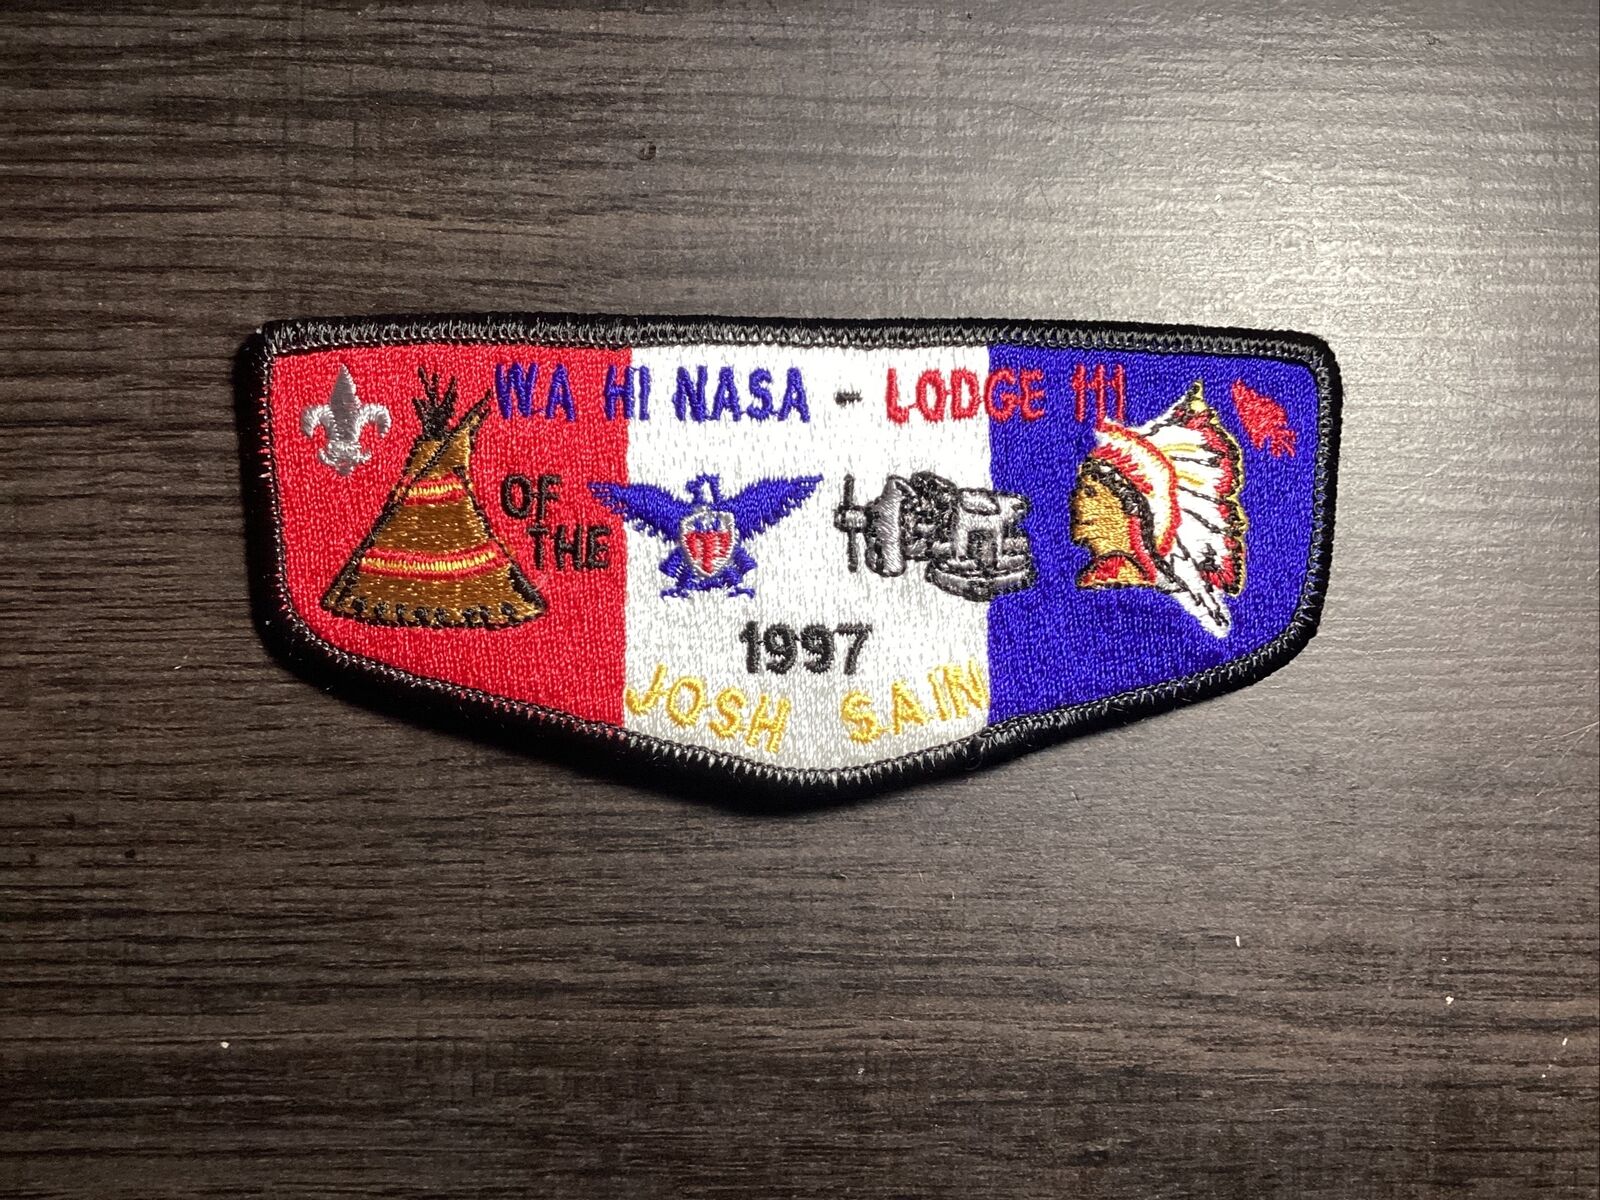 Boy Scout OA 111 Wa-Hi-Nasa Lodge 1997 National Vice Chief Josh Sain Flap